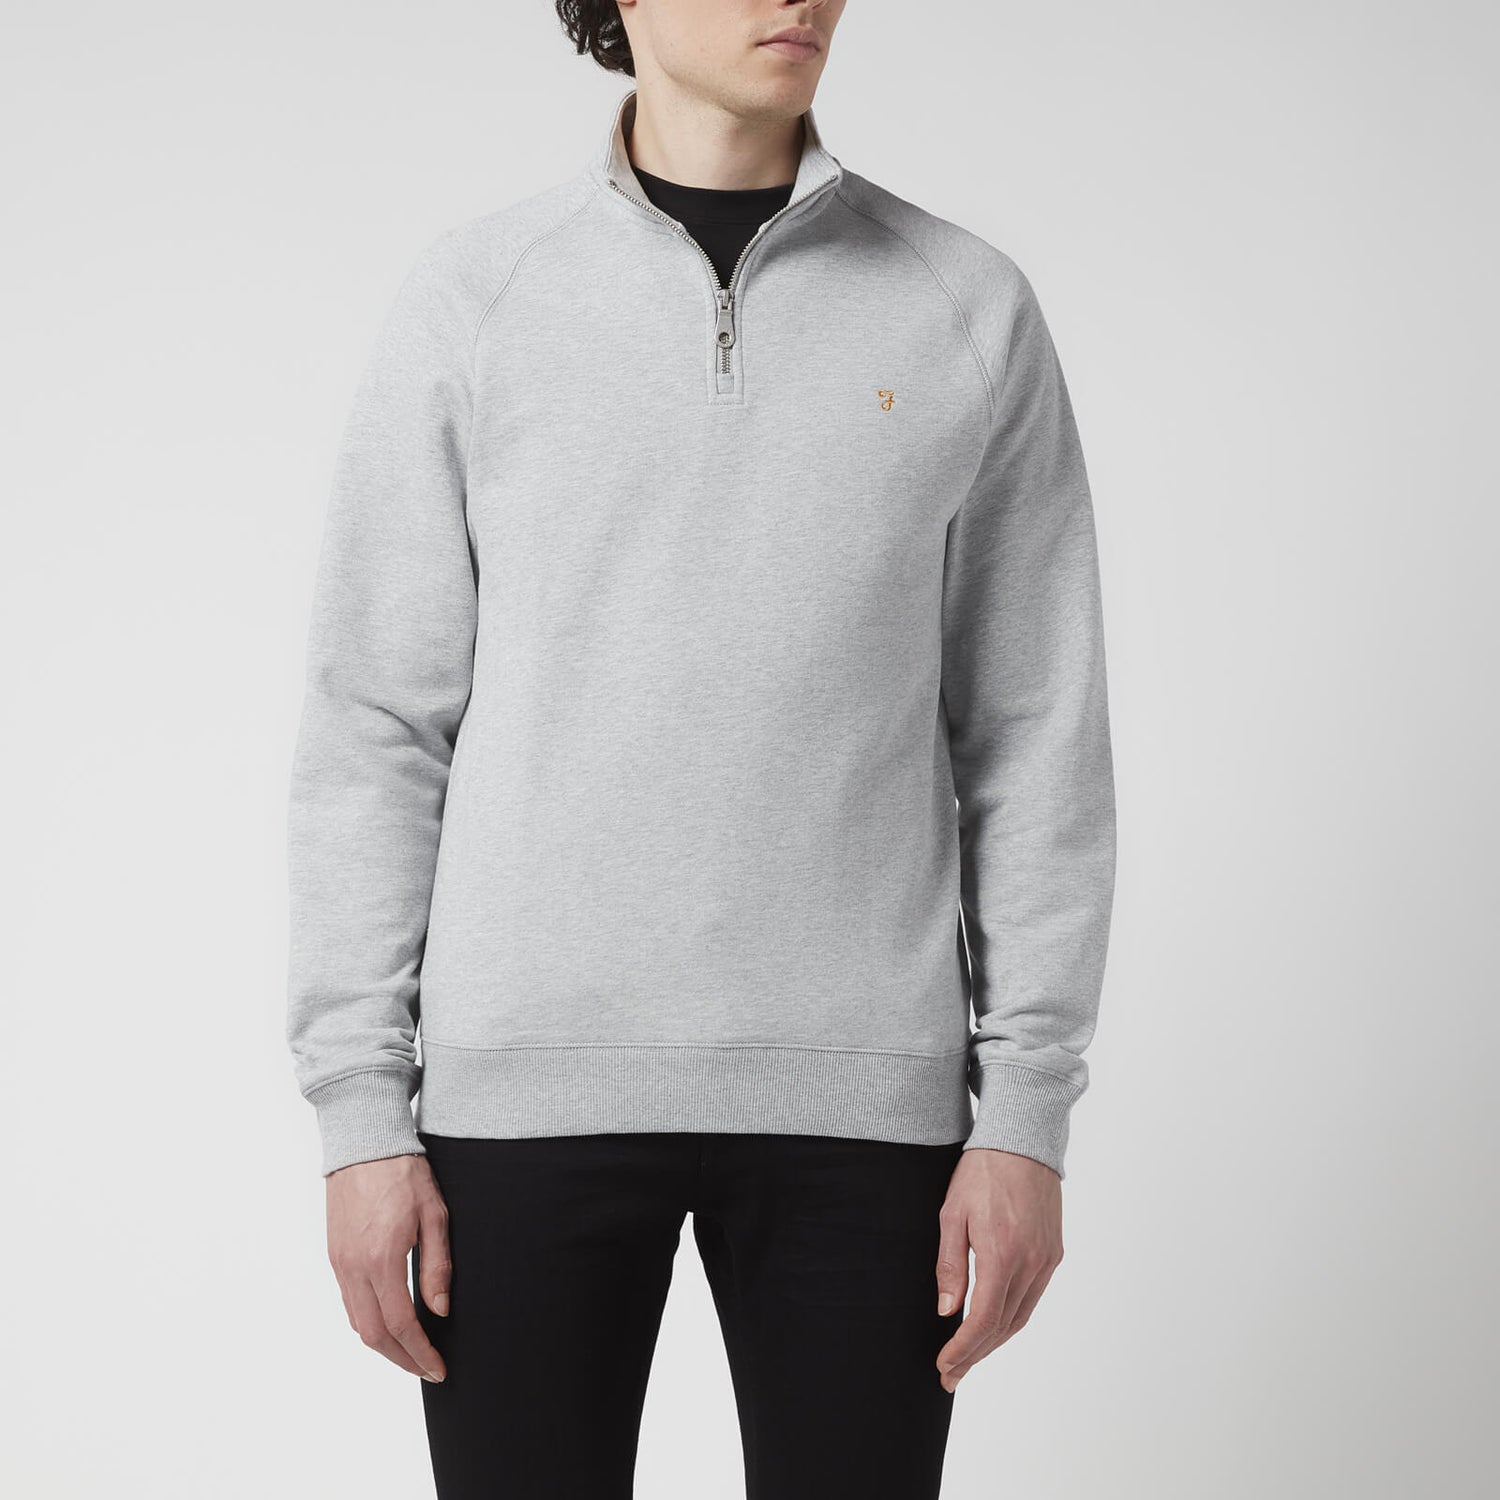 Farah Men's Jim Quarter Zip Sweatshirt - Light Grey Marl - XL